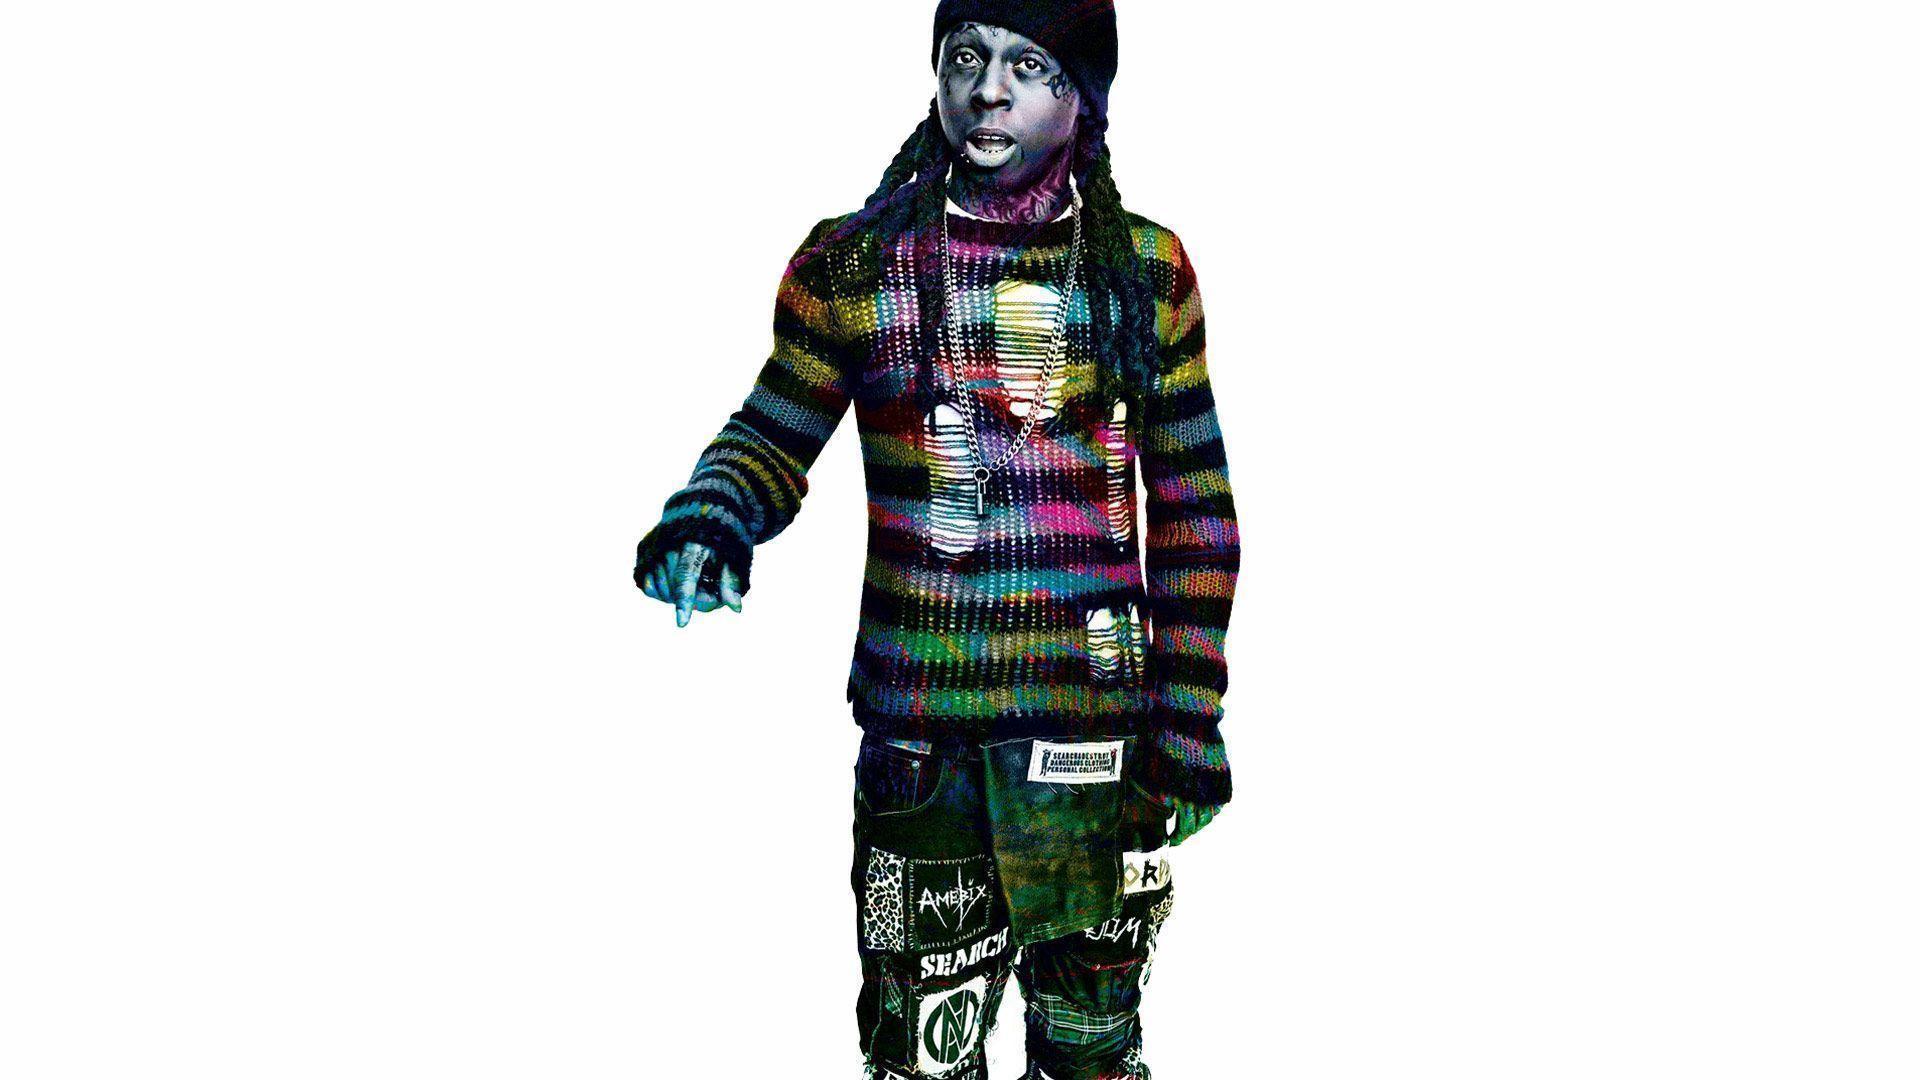 Lil Wayne Wallpaper HD Image New